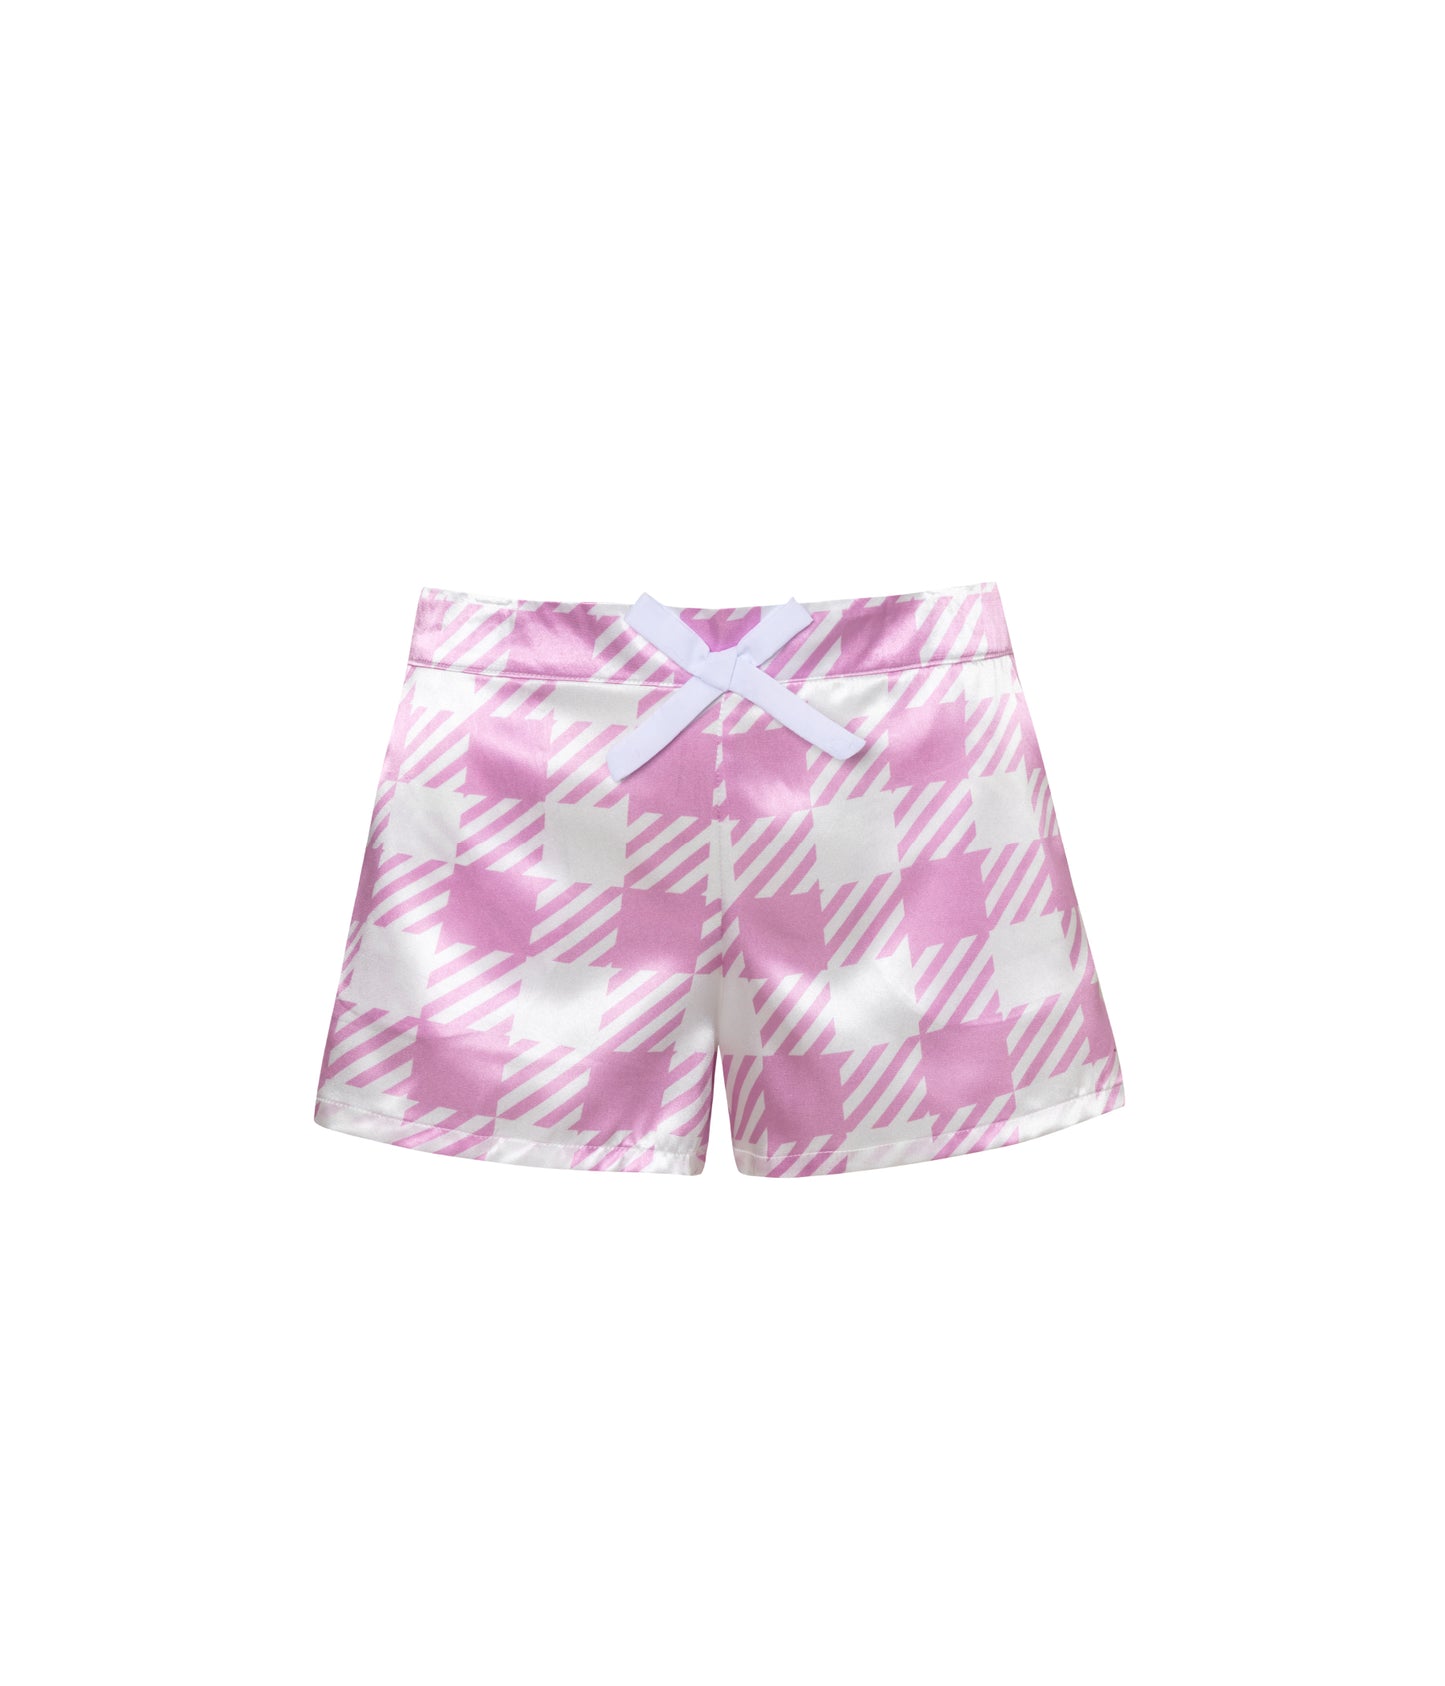 Verdelimon - Shorts - Santorini - Printed - Pink Squares - Front